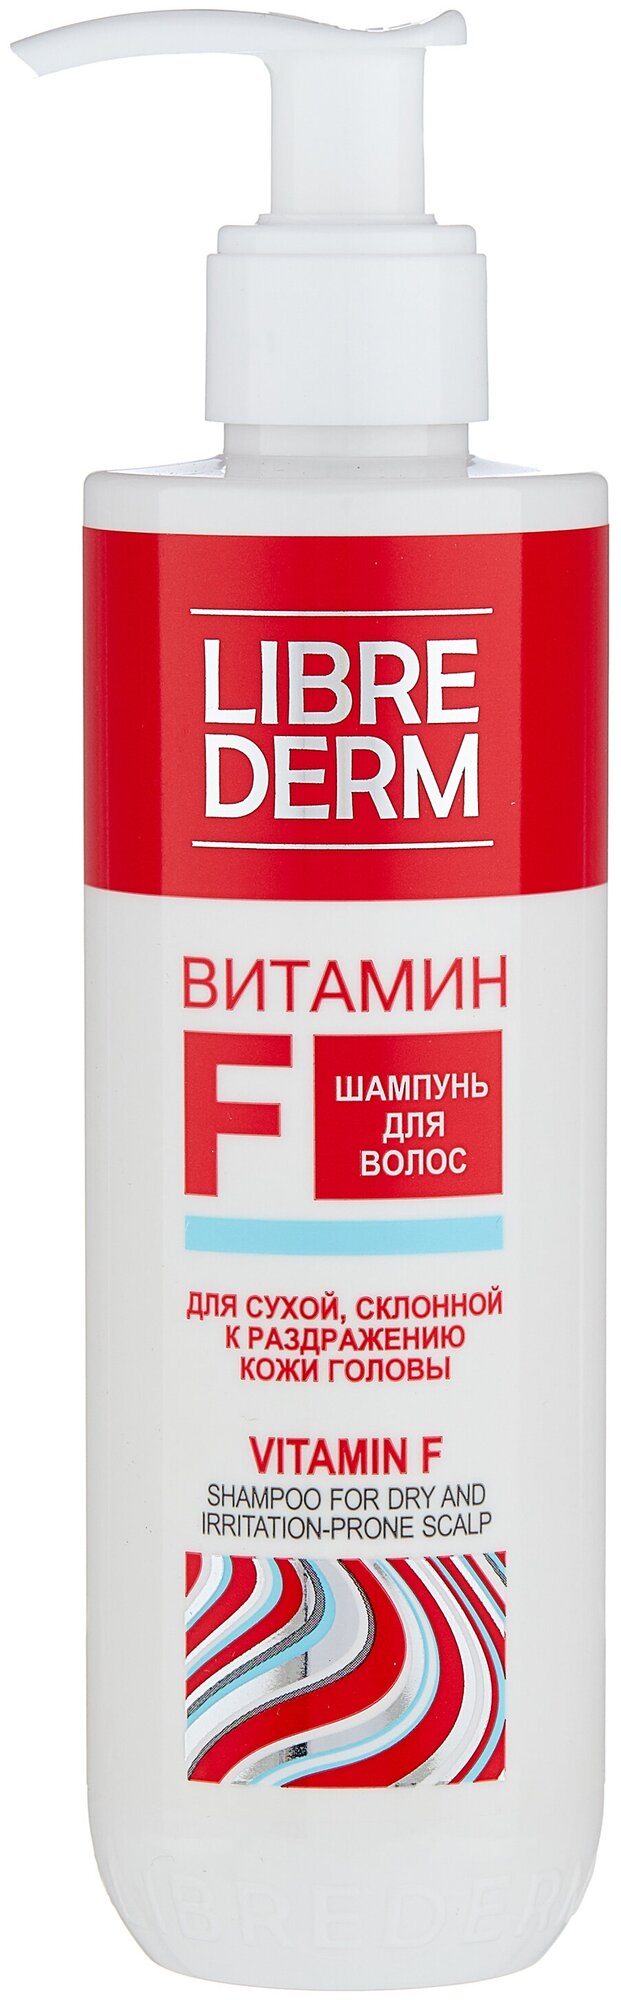 Librederm шампунь Витамин F, 250 мл